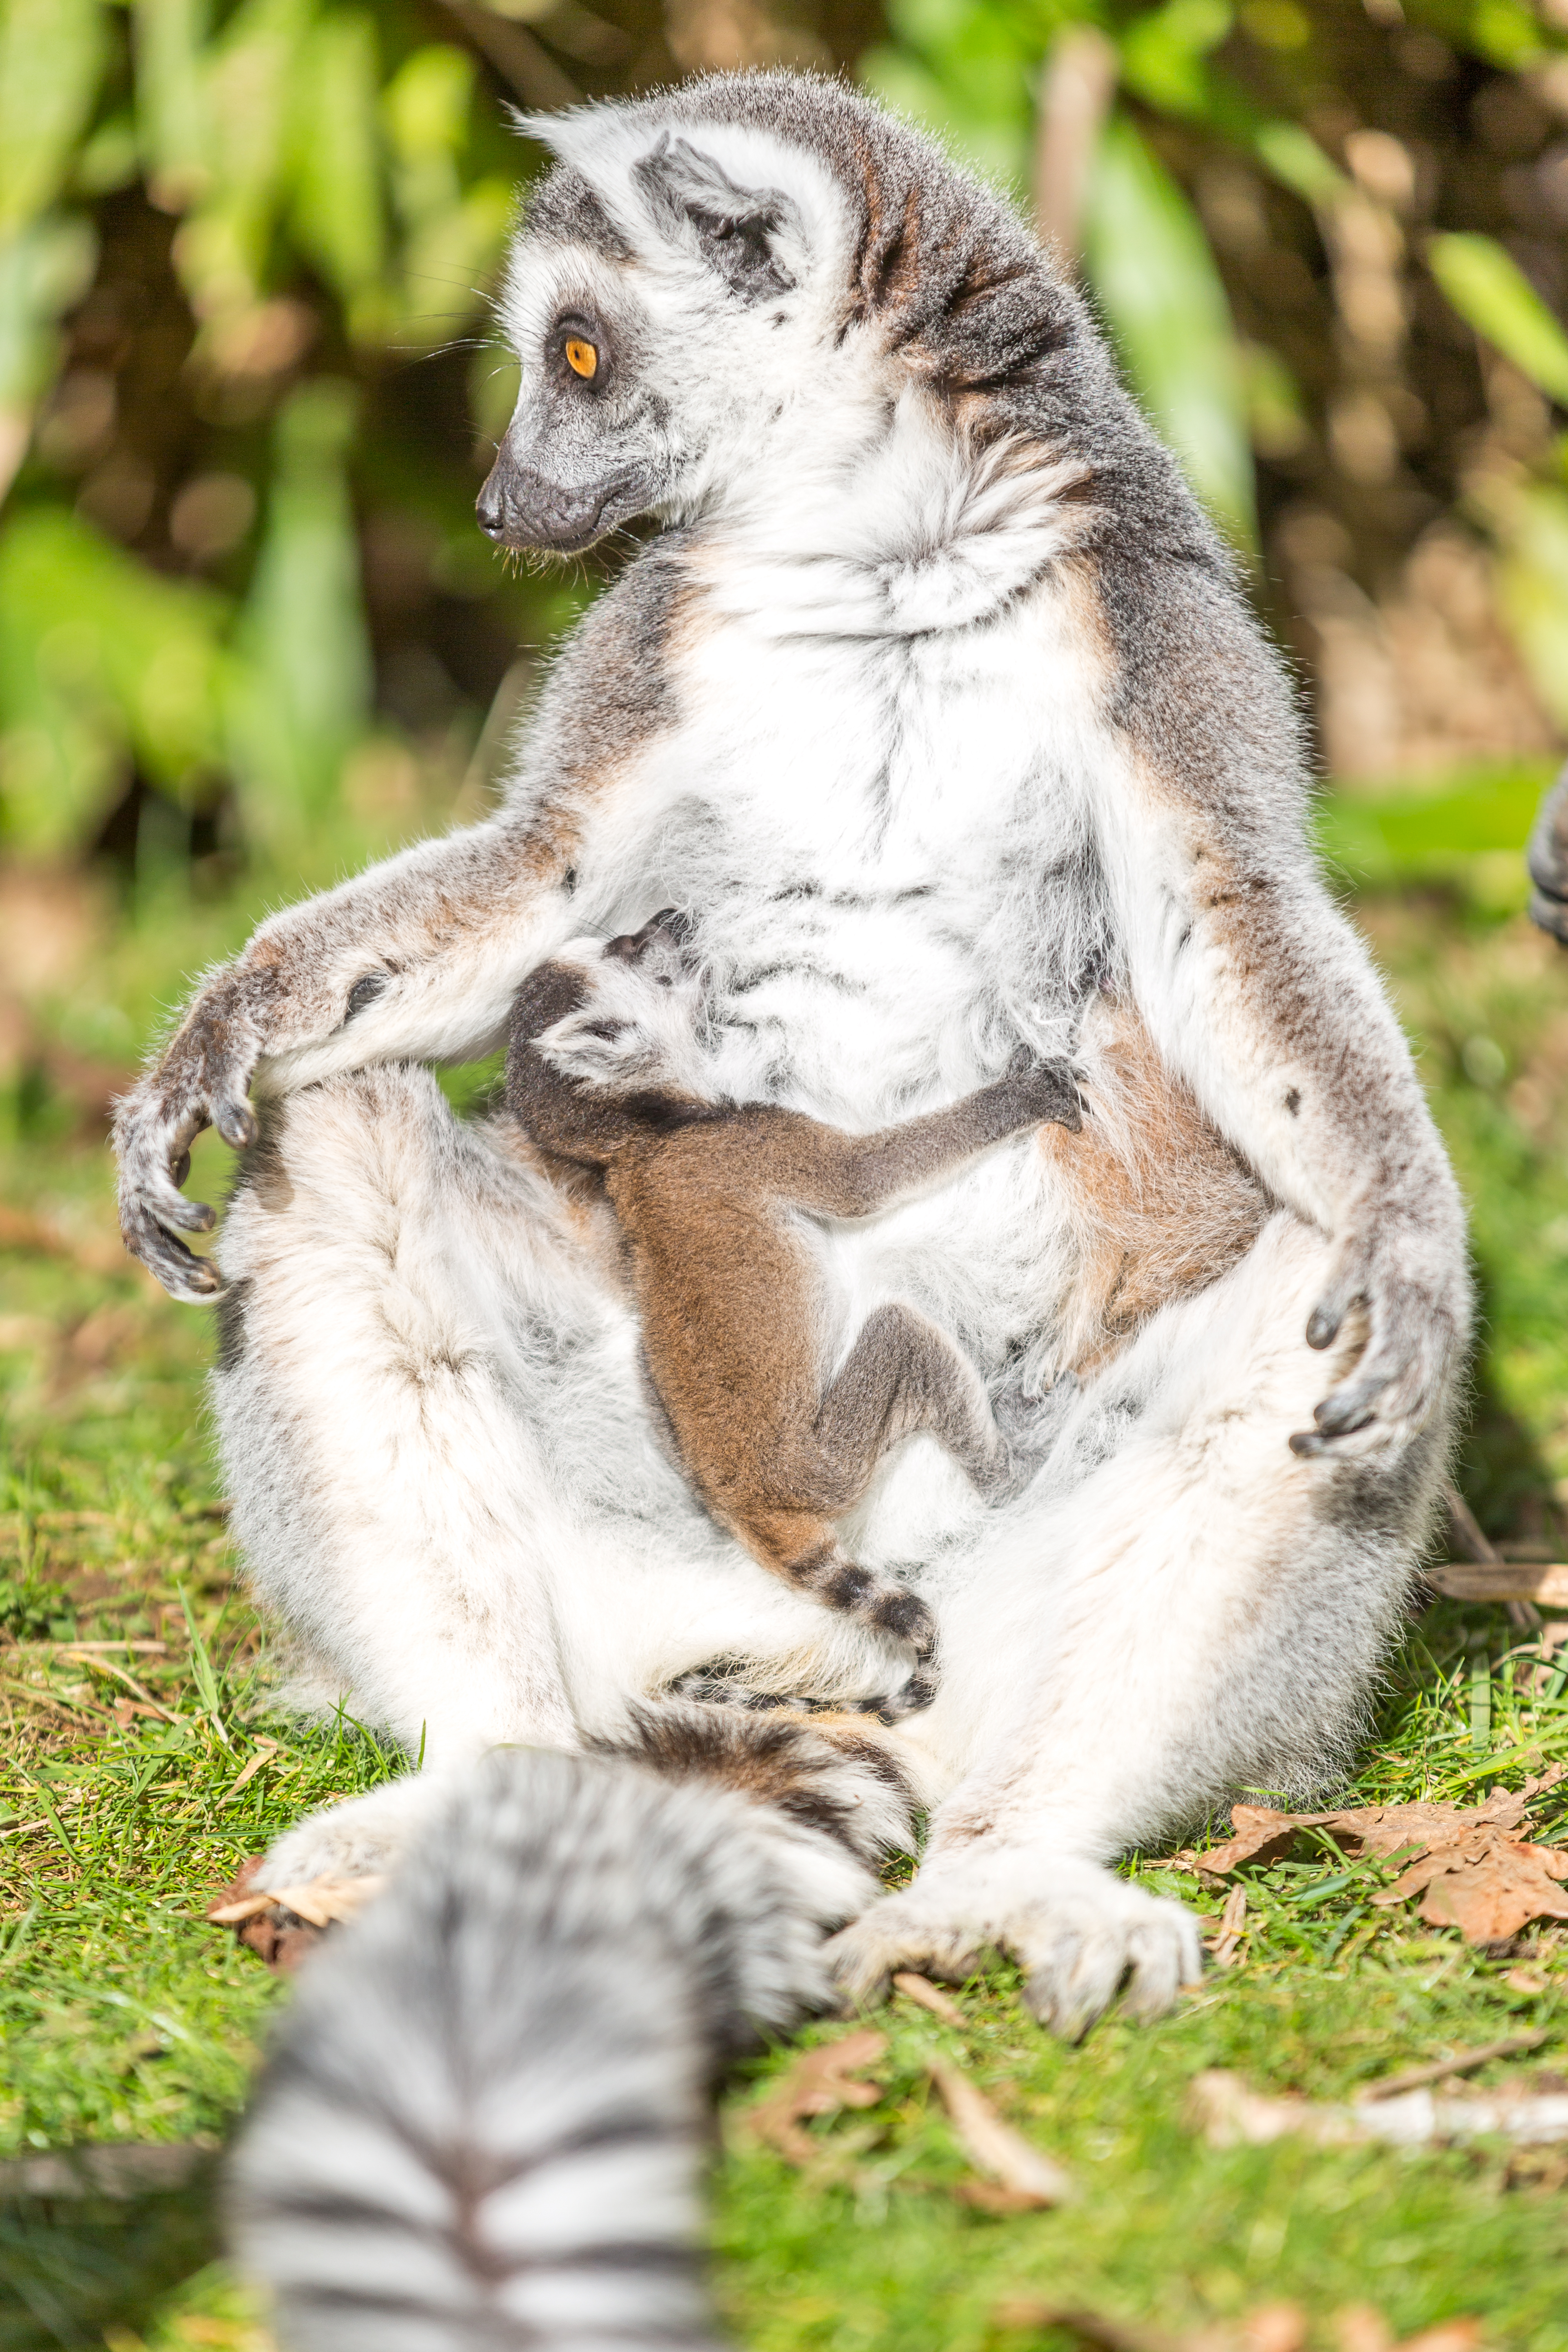 Newborn lemur at Woburn Safari Park with its mother (Woburn Safari Park)